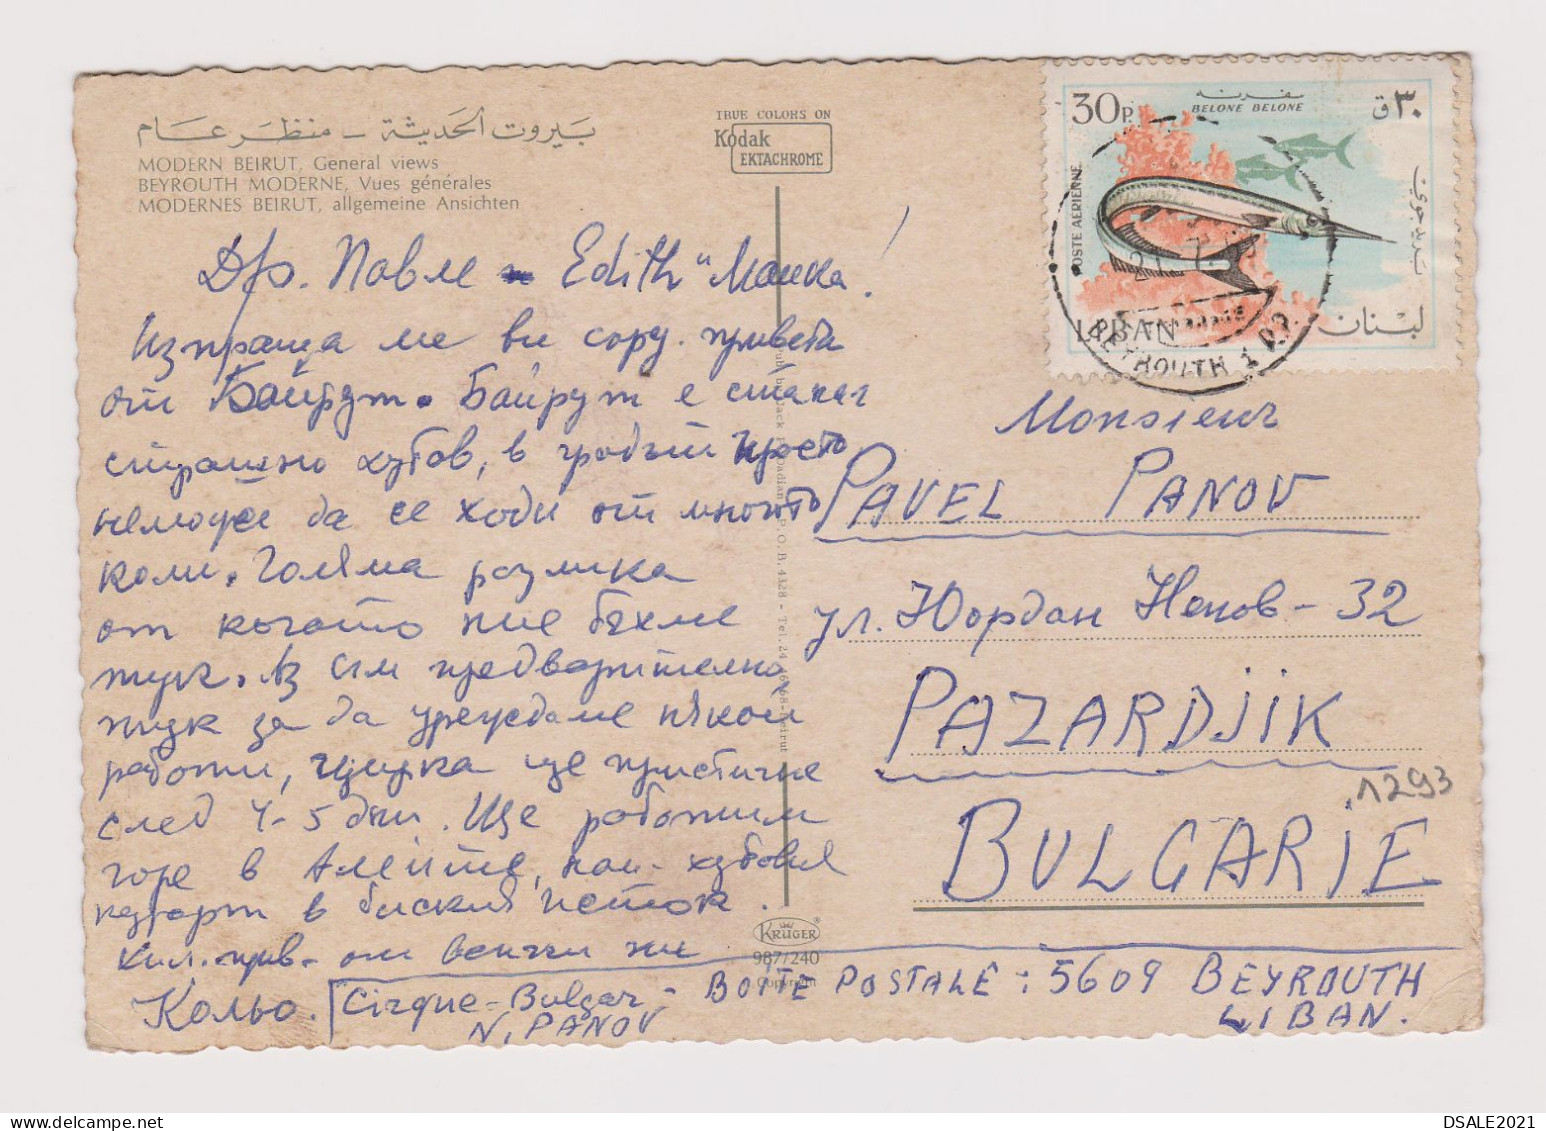 Lebanon BEIRUT Multiple Views, Vintage Photo Postcard W/Topic Stamp Fish 1960s Sent Abroad To Bulgaria (1293) - Lebanon